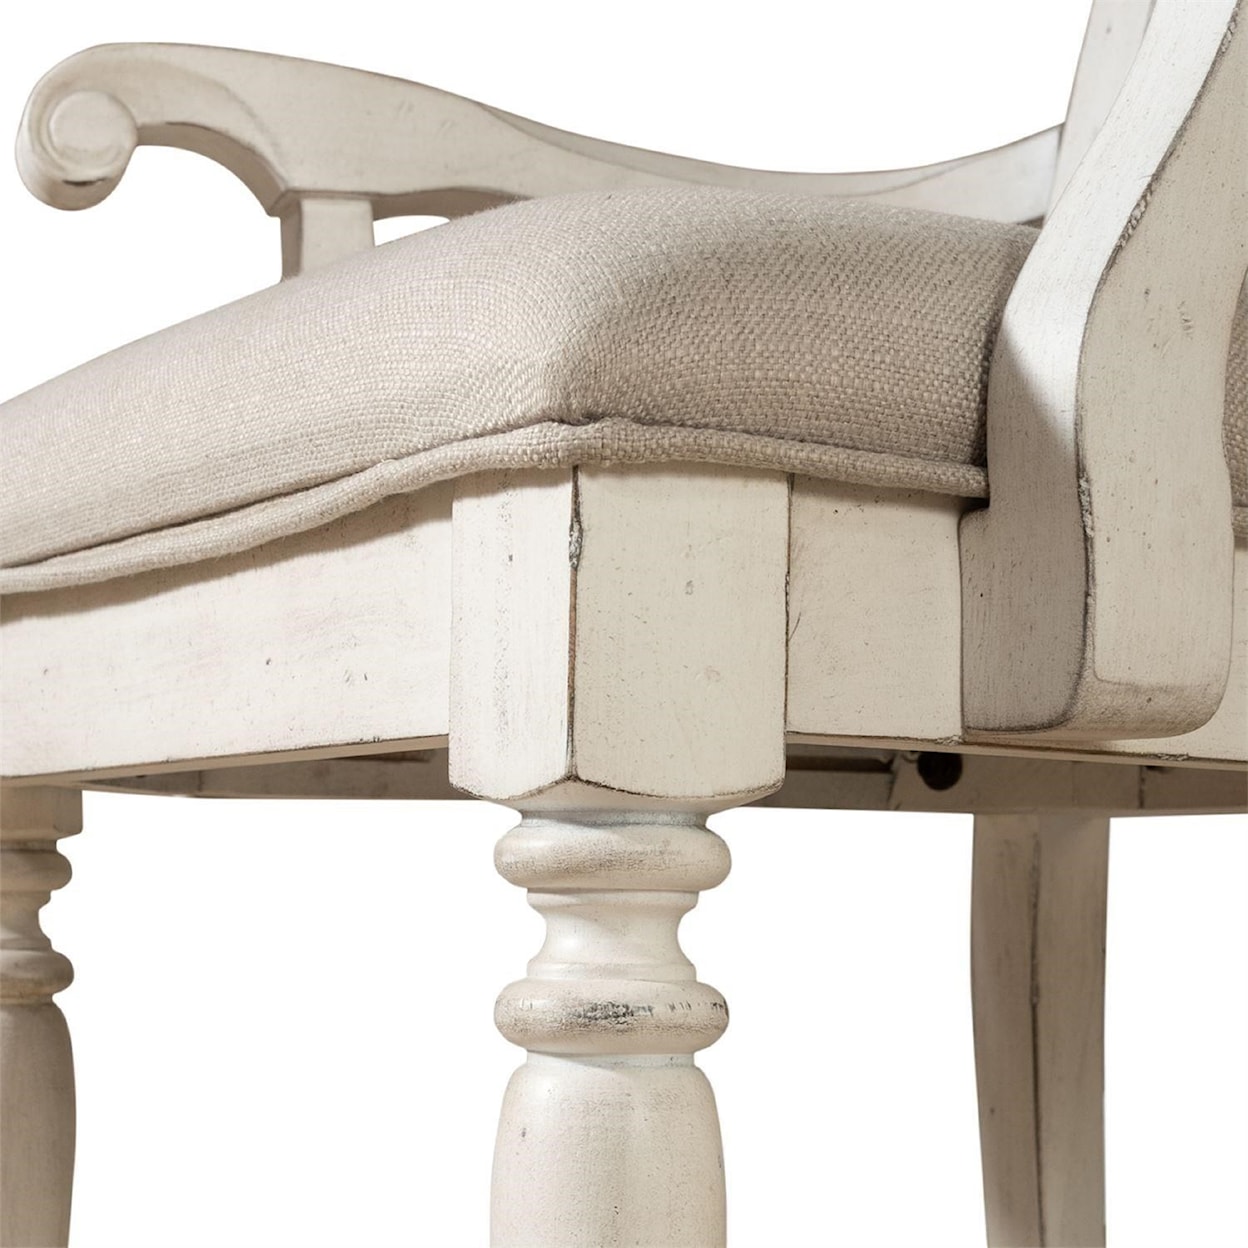 Liberty Furniture Abbey Road Splat Back Arm Chair